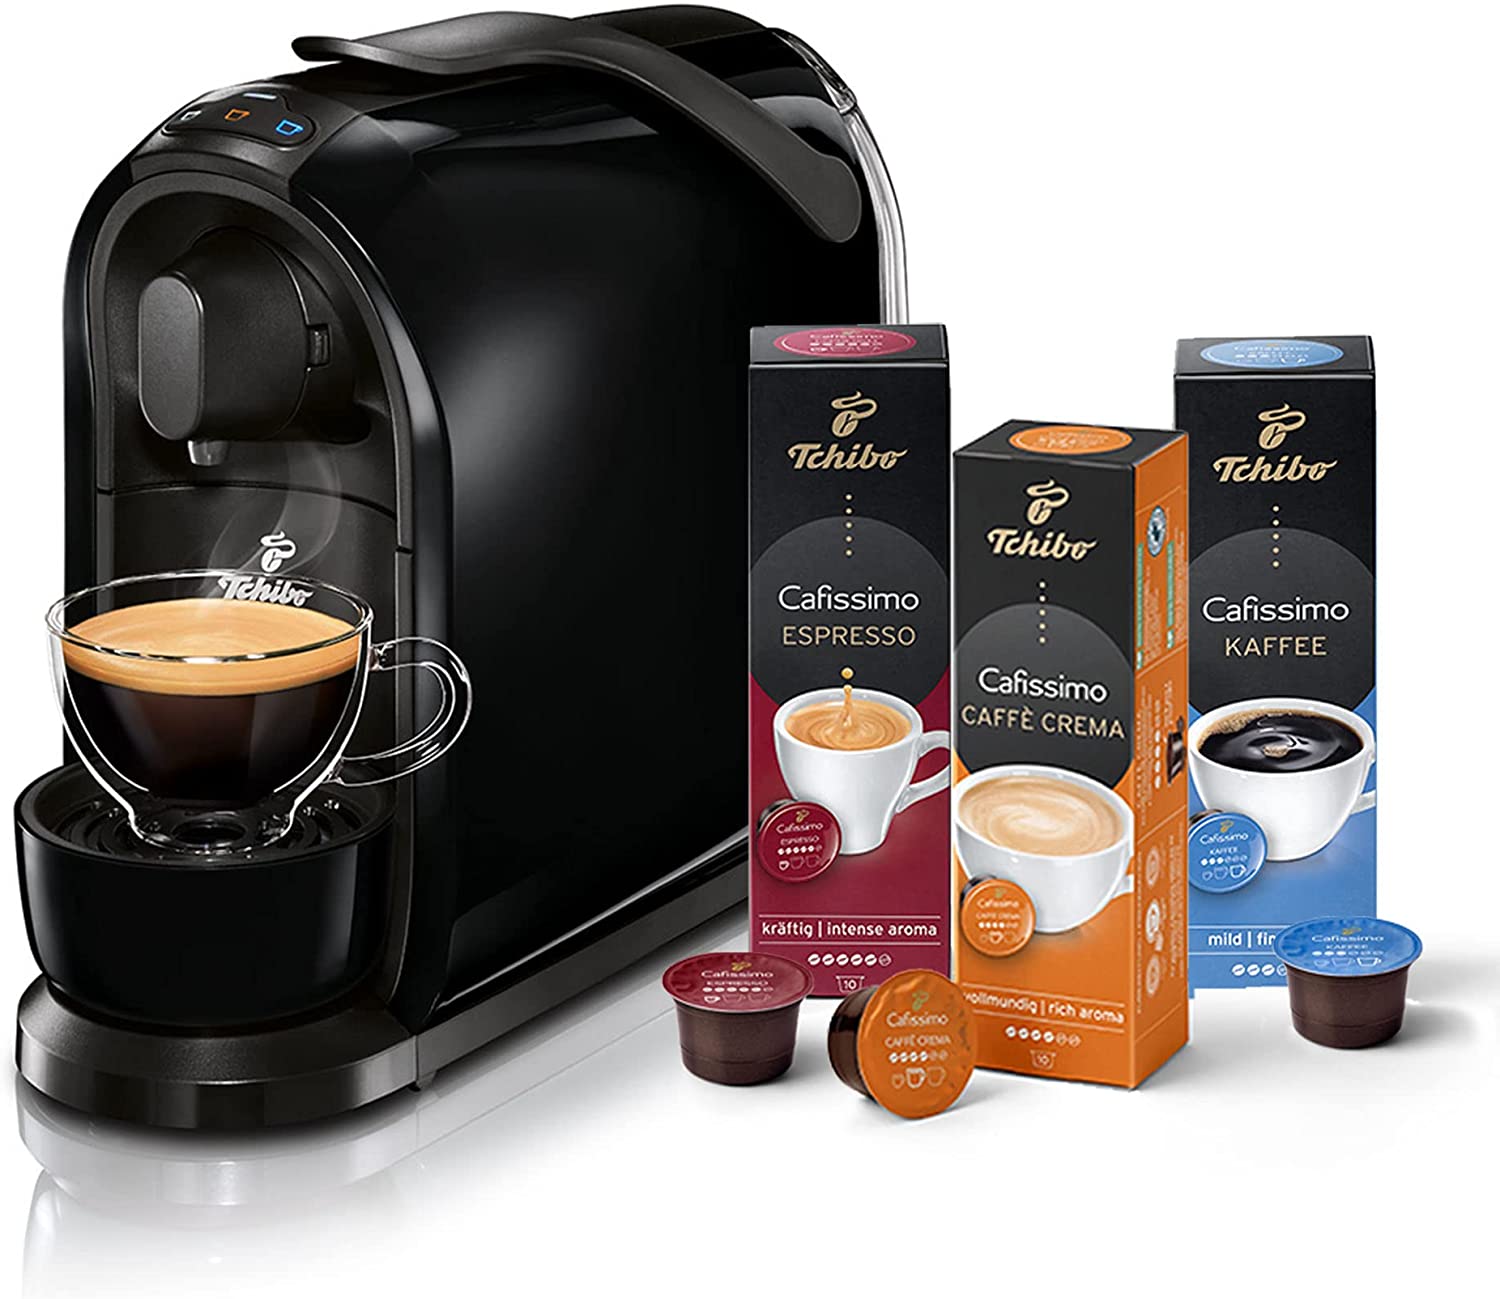 Tchibo Cafissimo Pure Coffee Machine for Coffee, Espresso, Caffè Crema and Tea, Includes 30 Capsules, Black